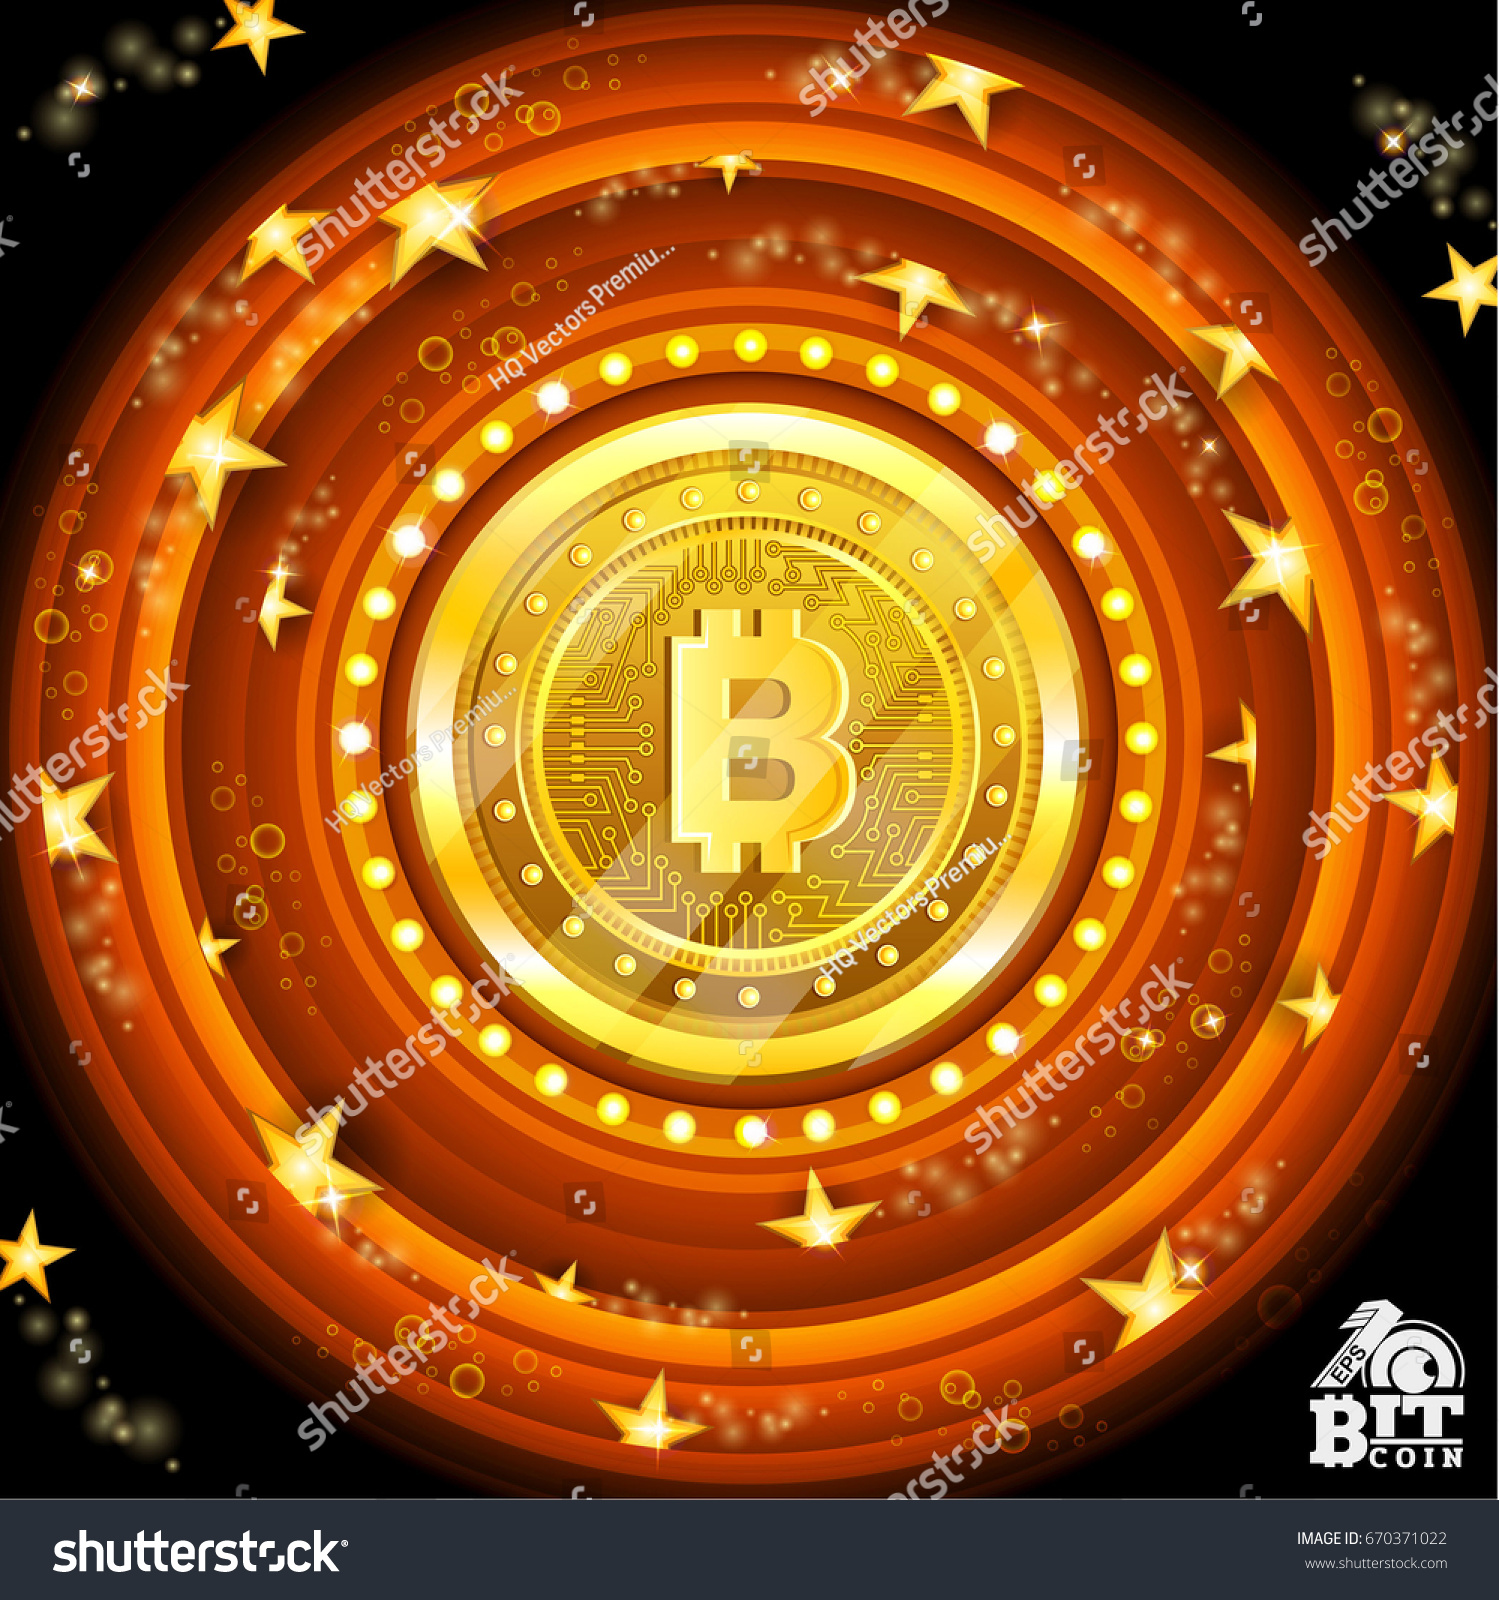 SVG of Golden bit coin in the center of orange round frames with stars svg